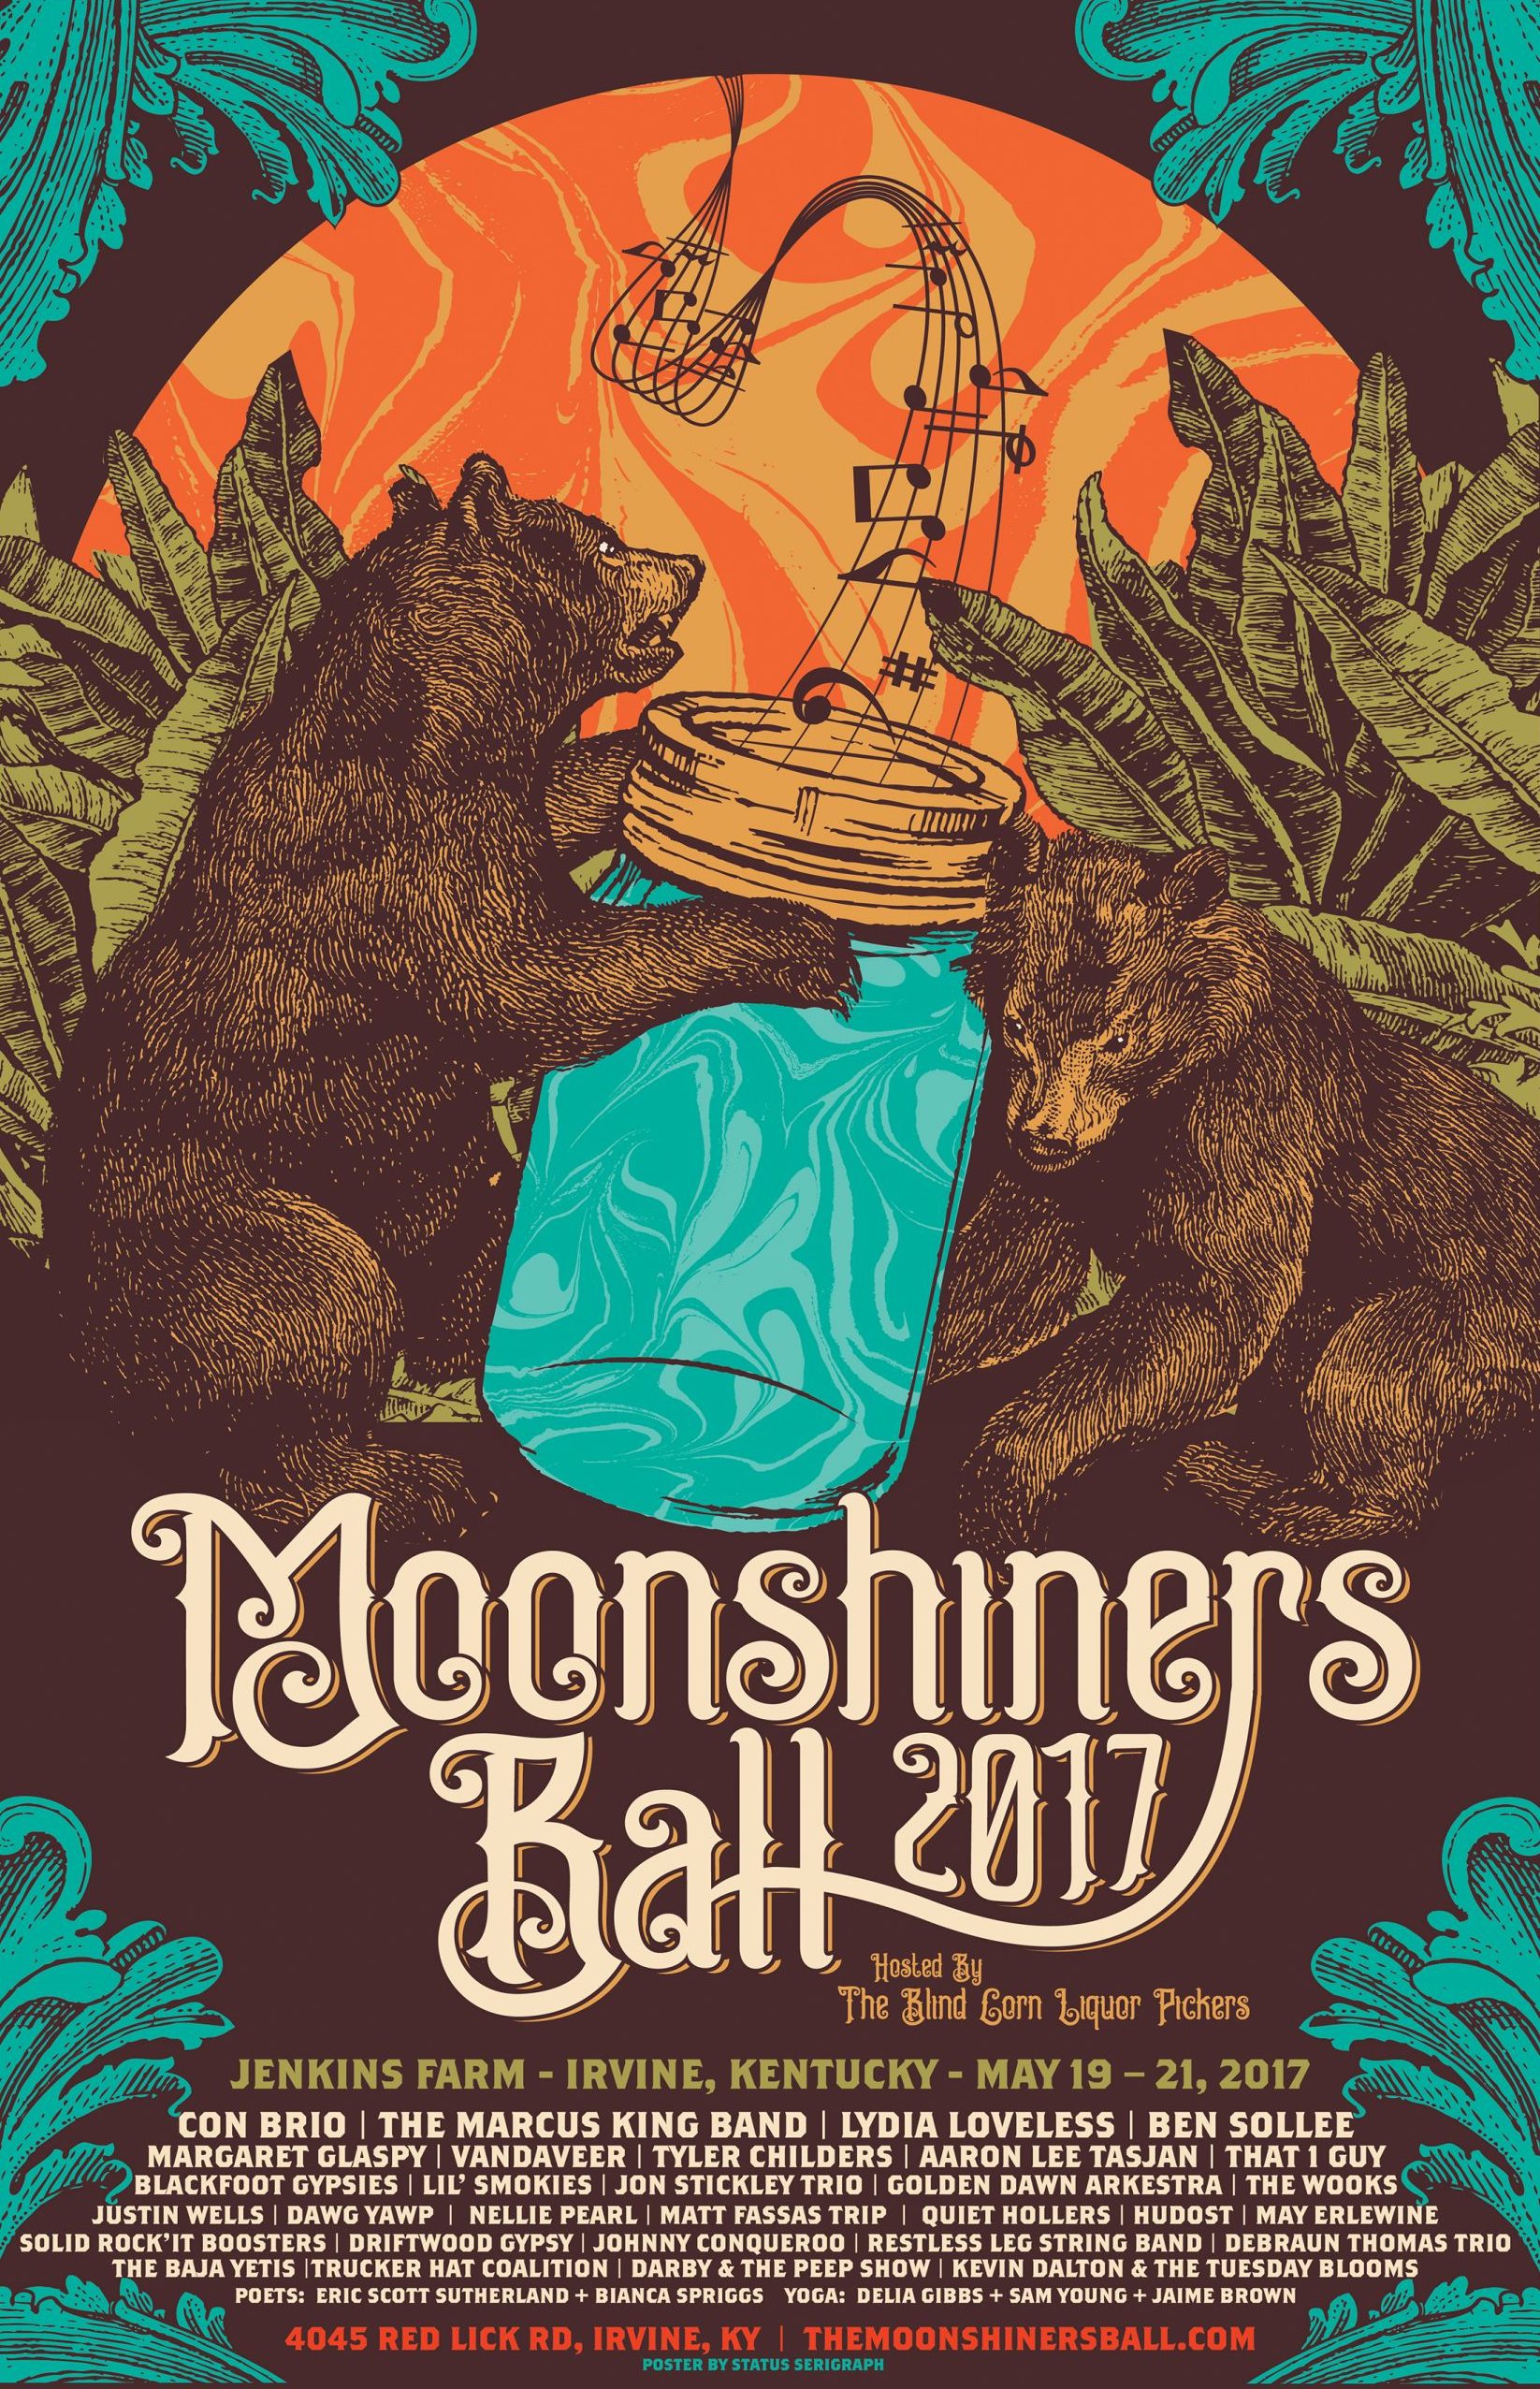 The Moonshiner’s Ball 2017 Lineup poster image